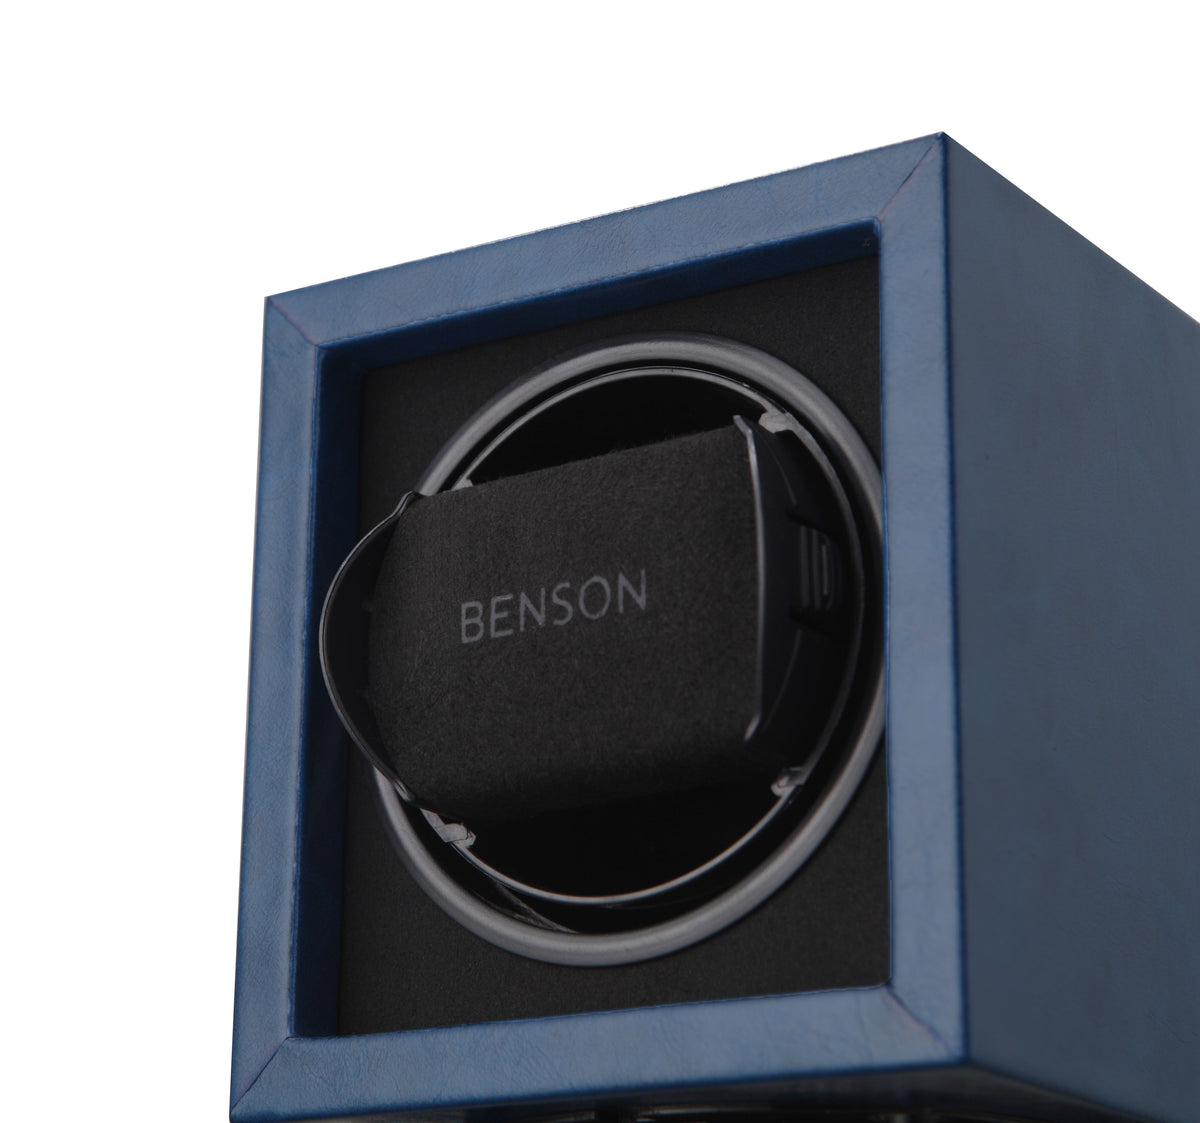 Benson Compact Series - Single Watch Winder in Blue